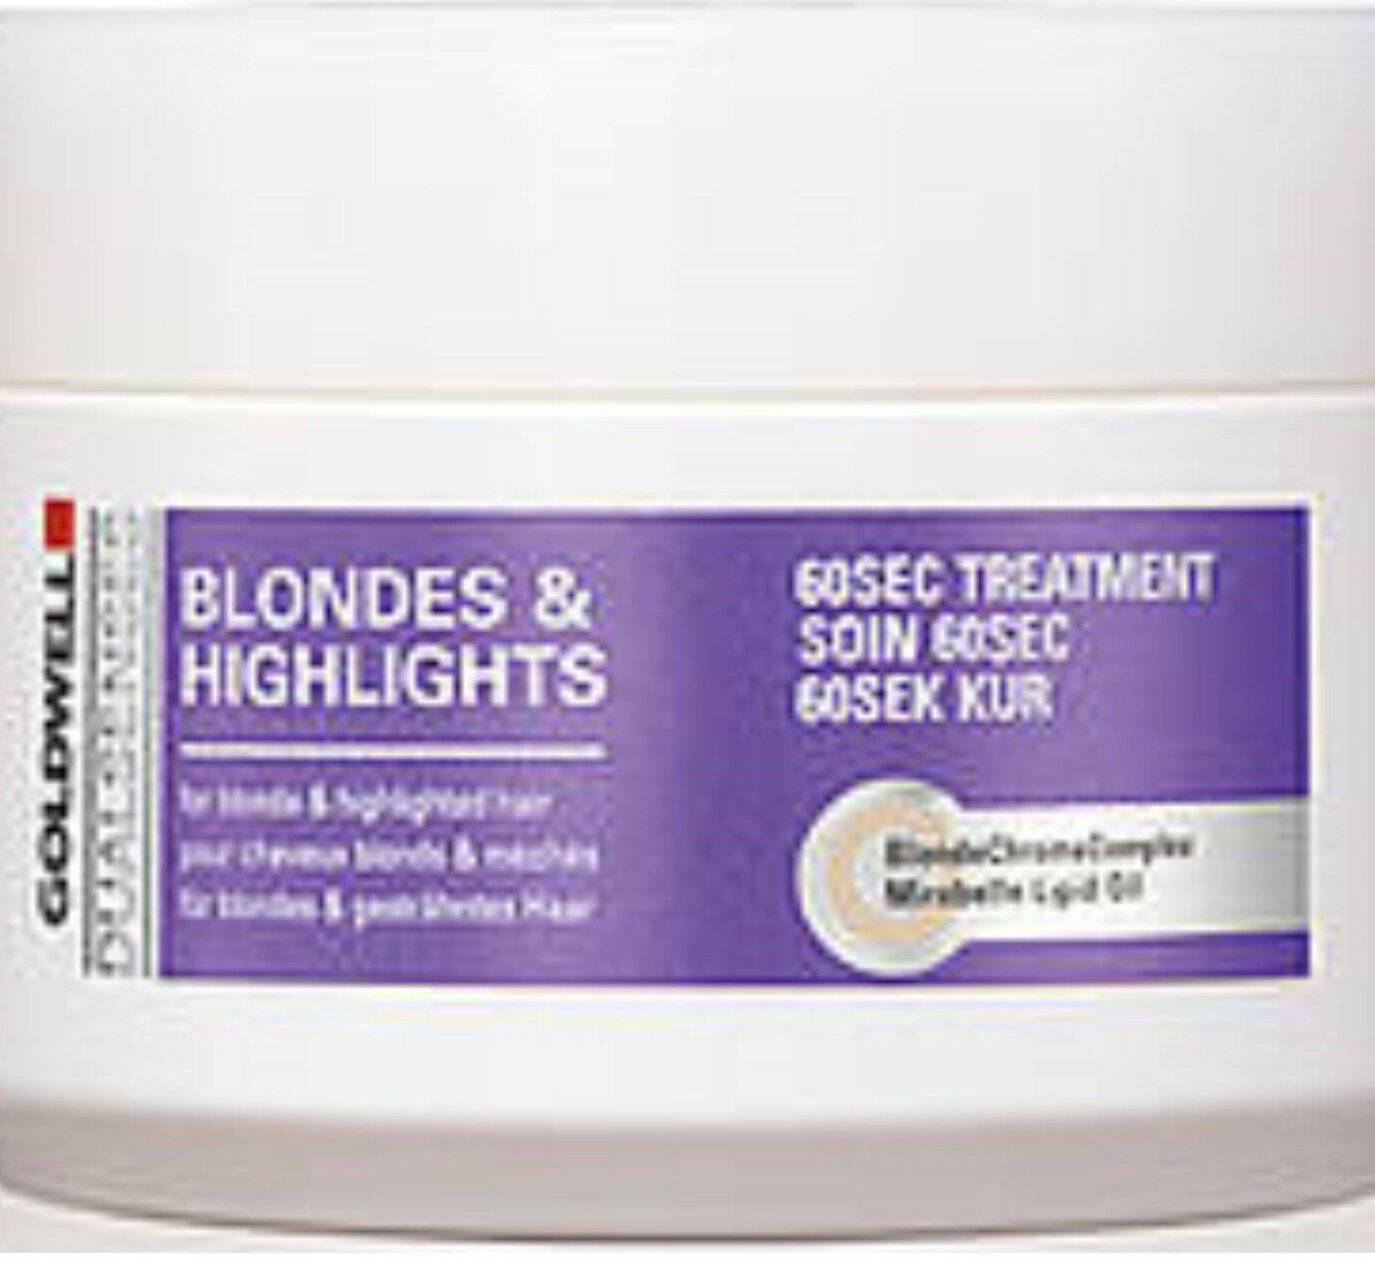 Goldwell Dualsenses Blondes Treatment Goldwell Dualsenses - On Line Hair Depot